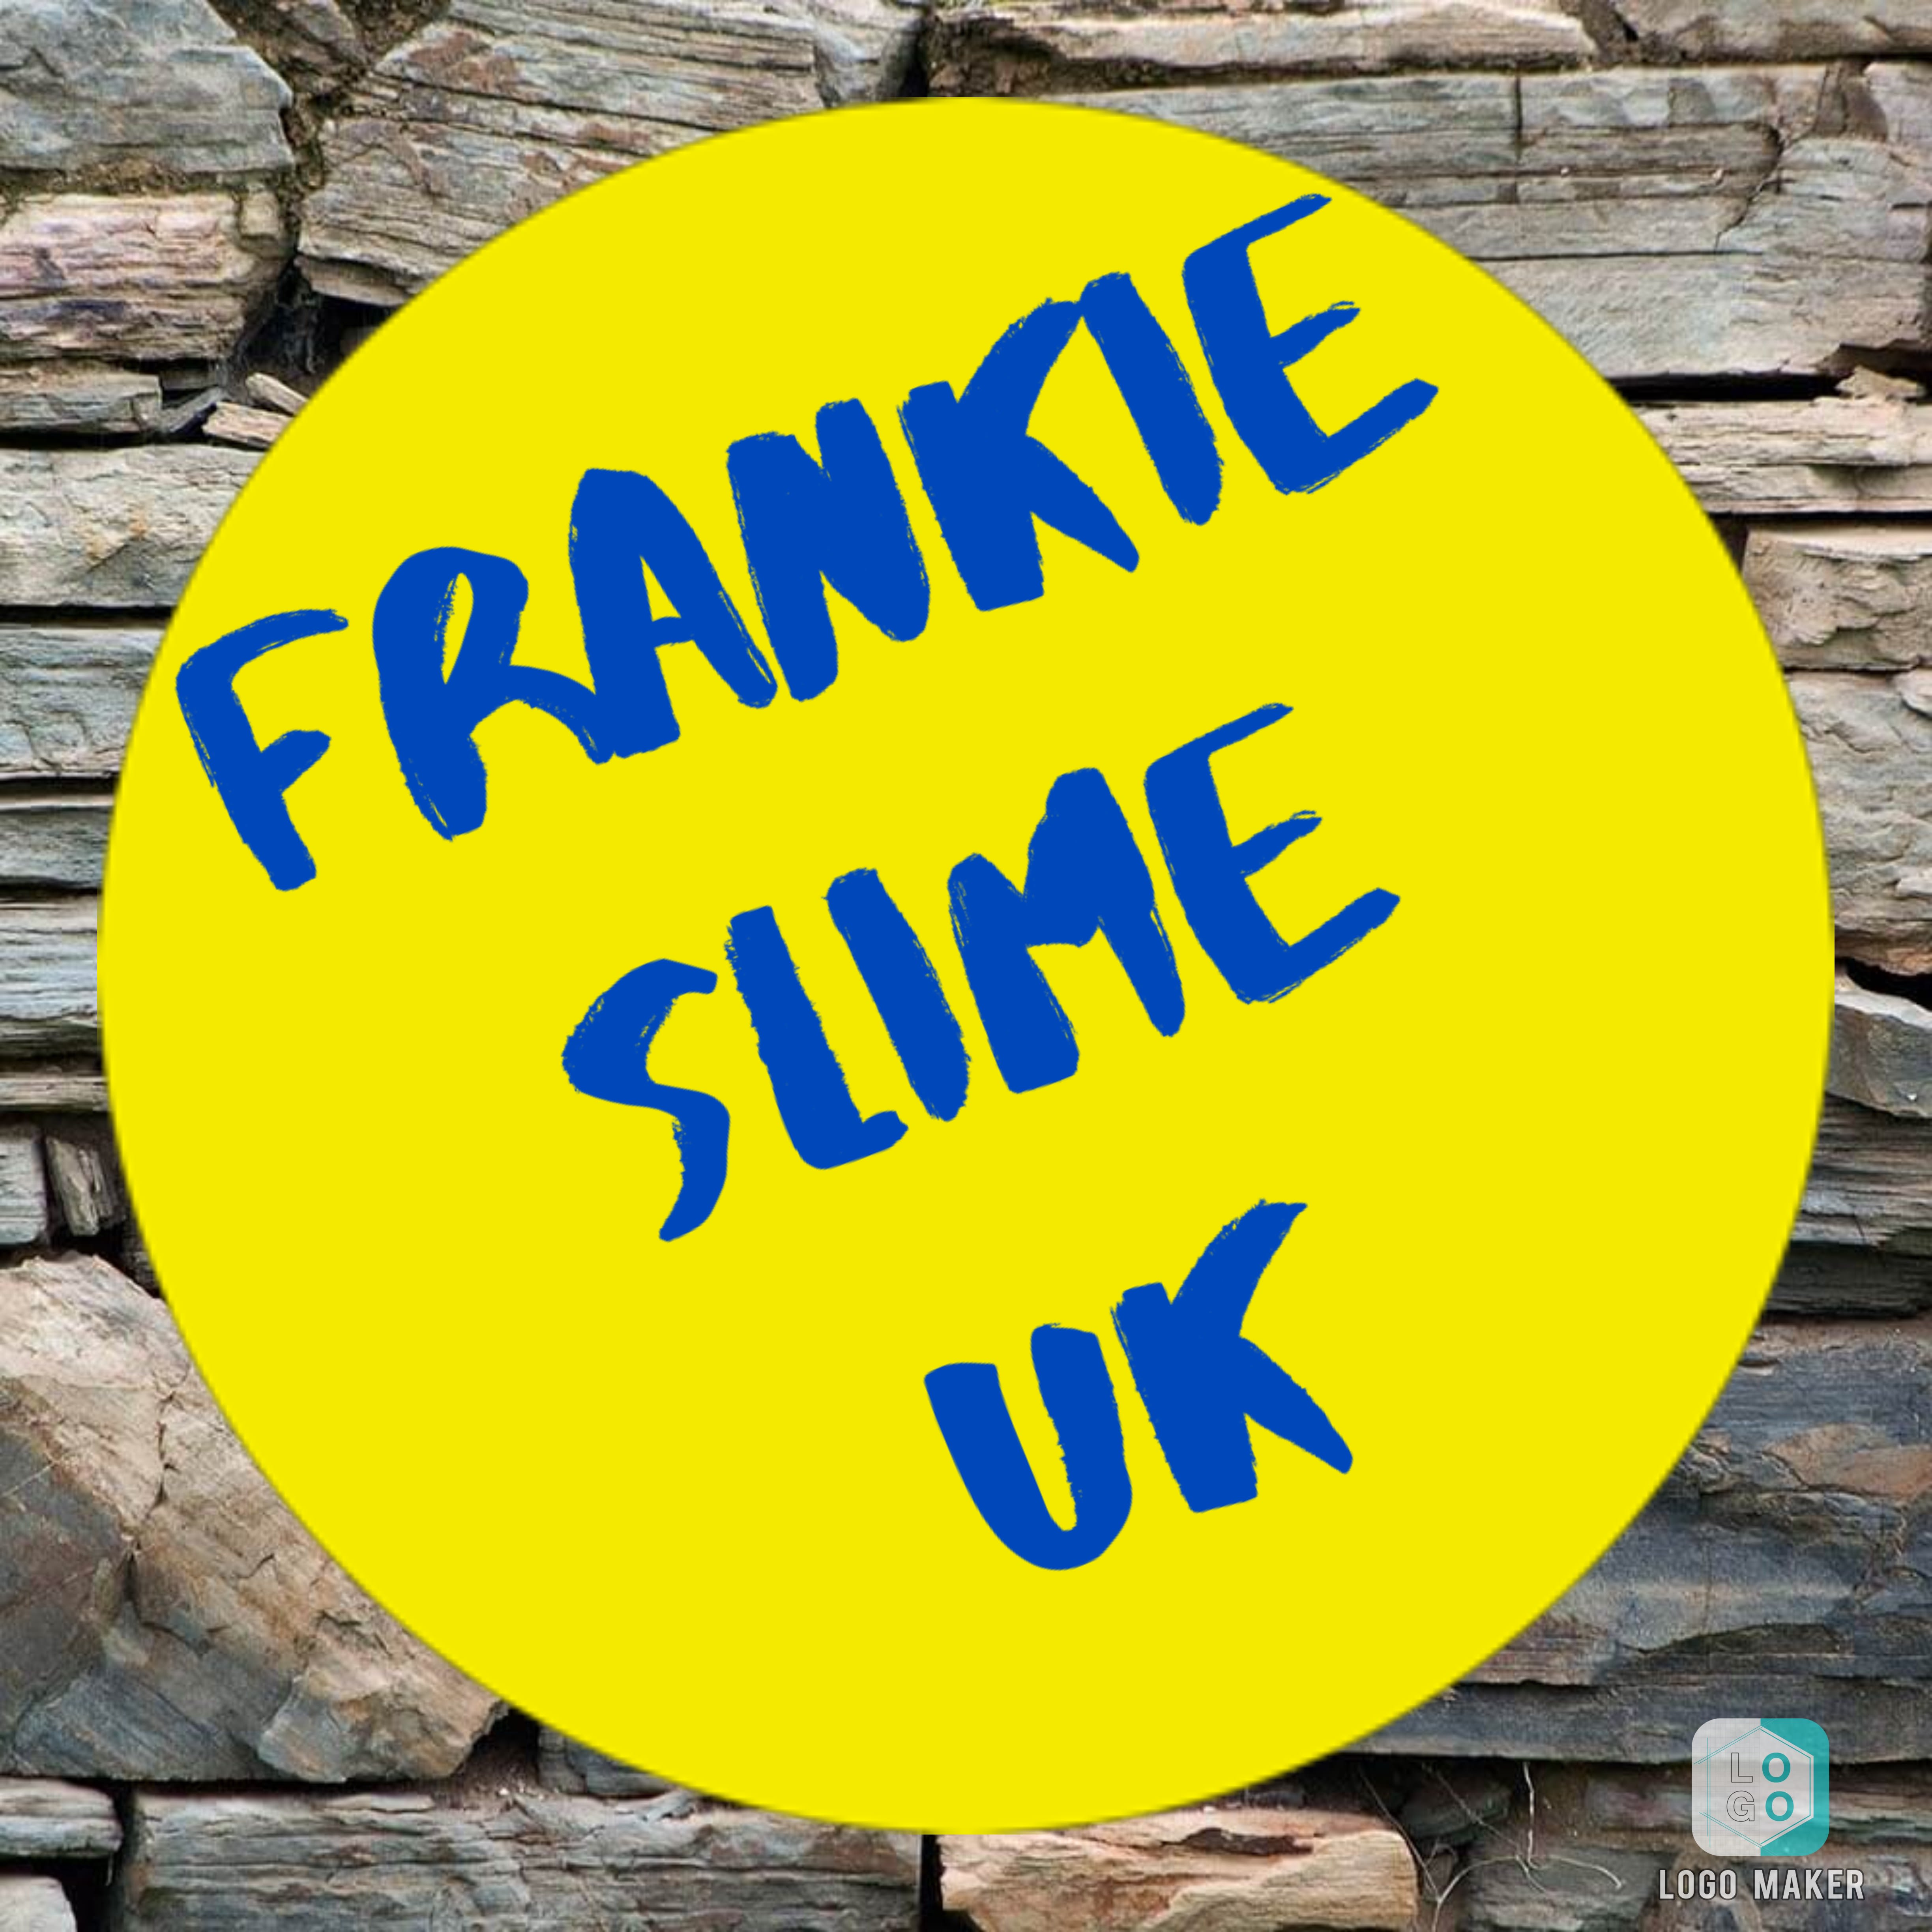 Frankie Slime Uk